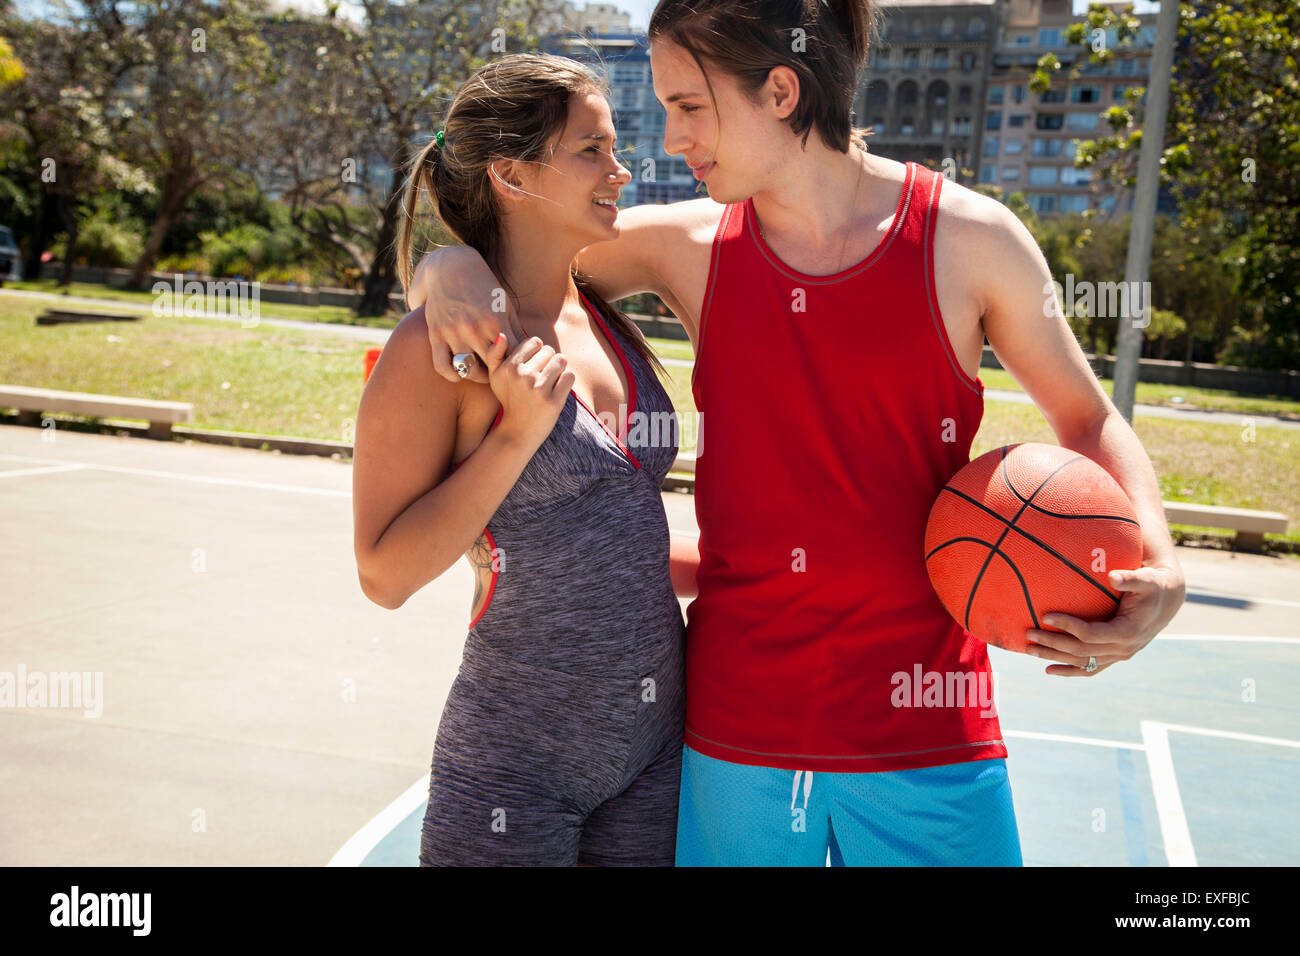 Junges Paar am Basketballplatz Stockfoto